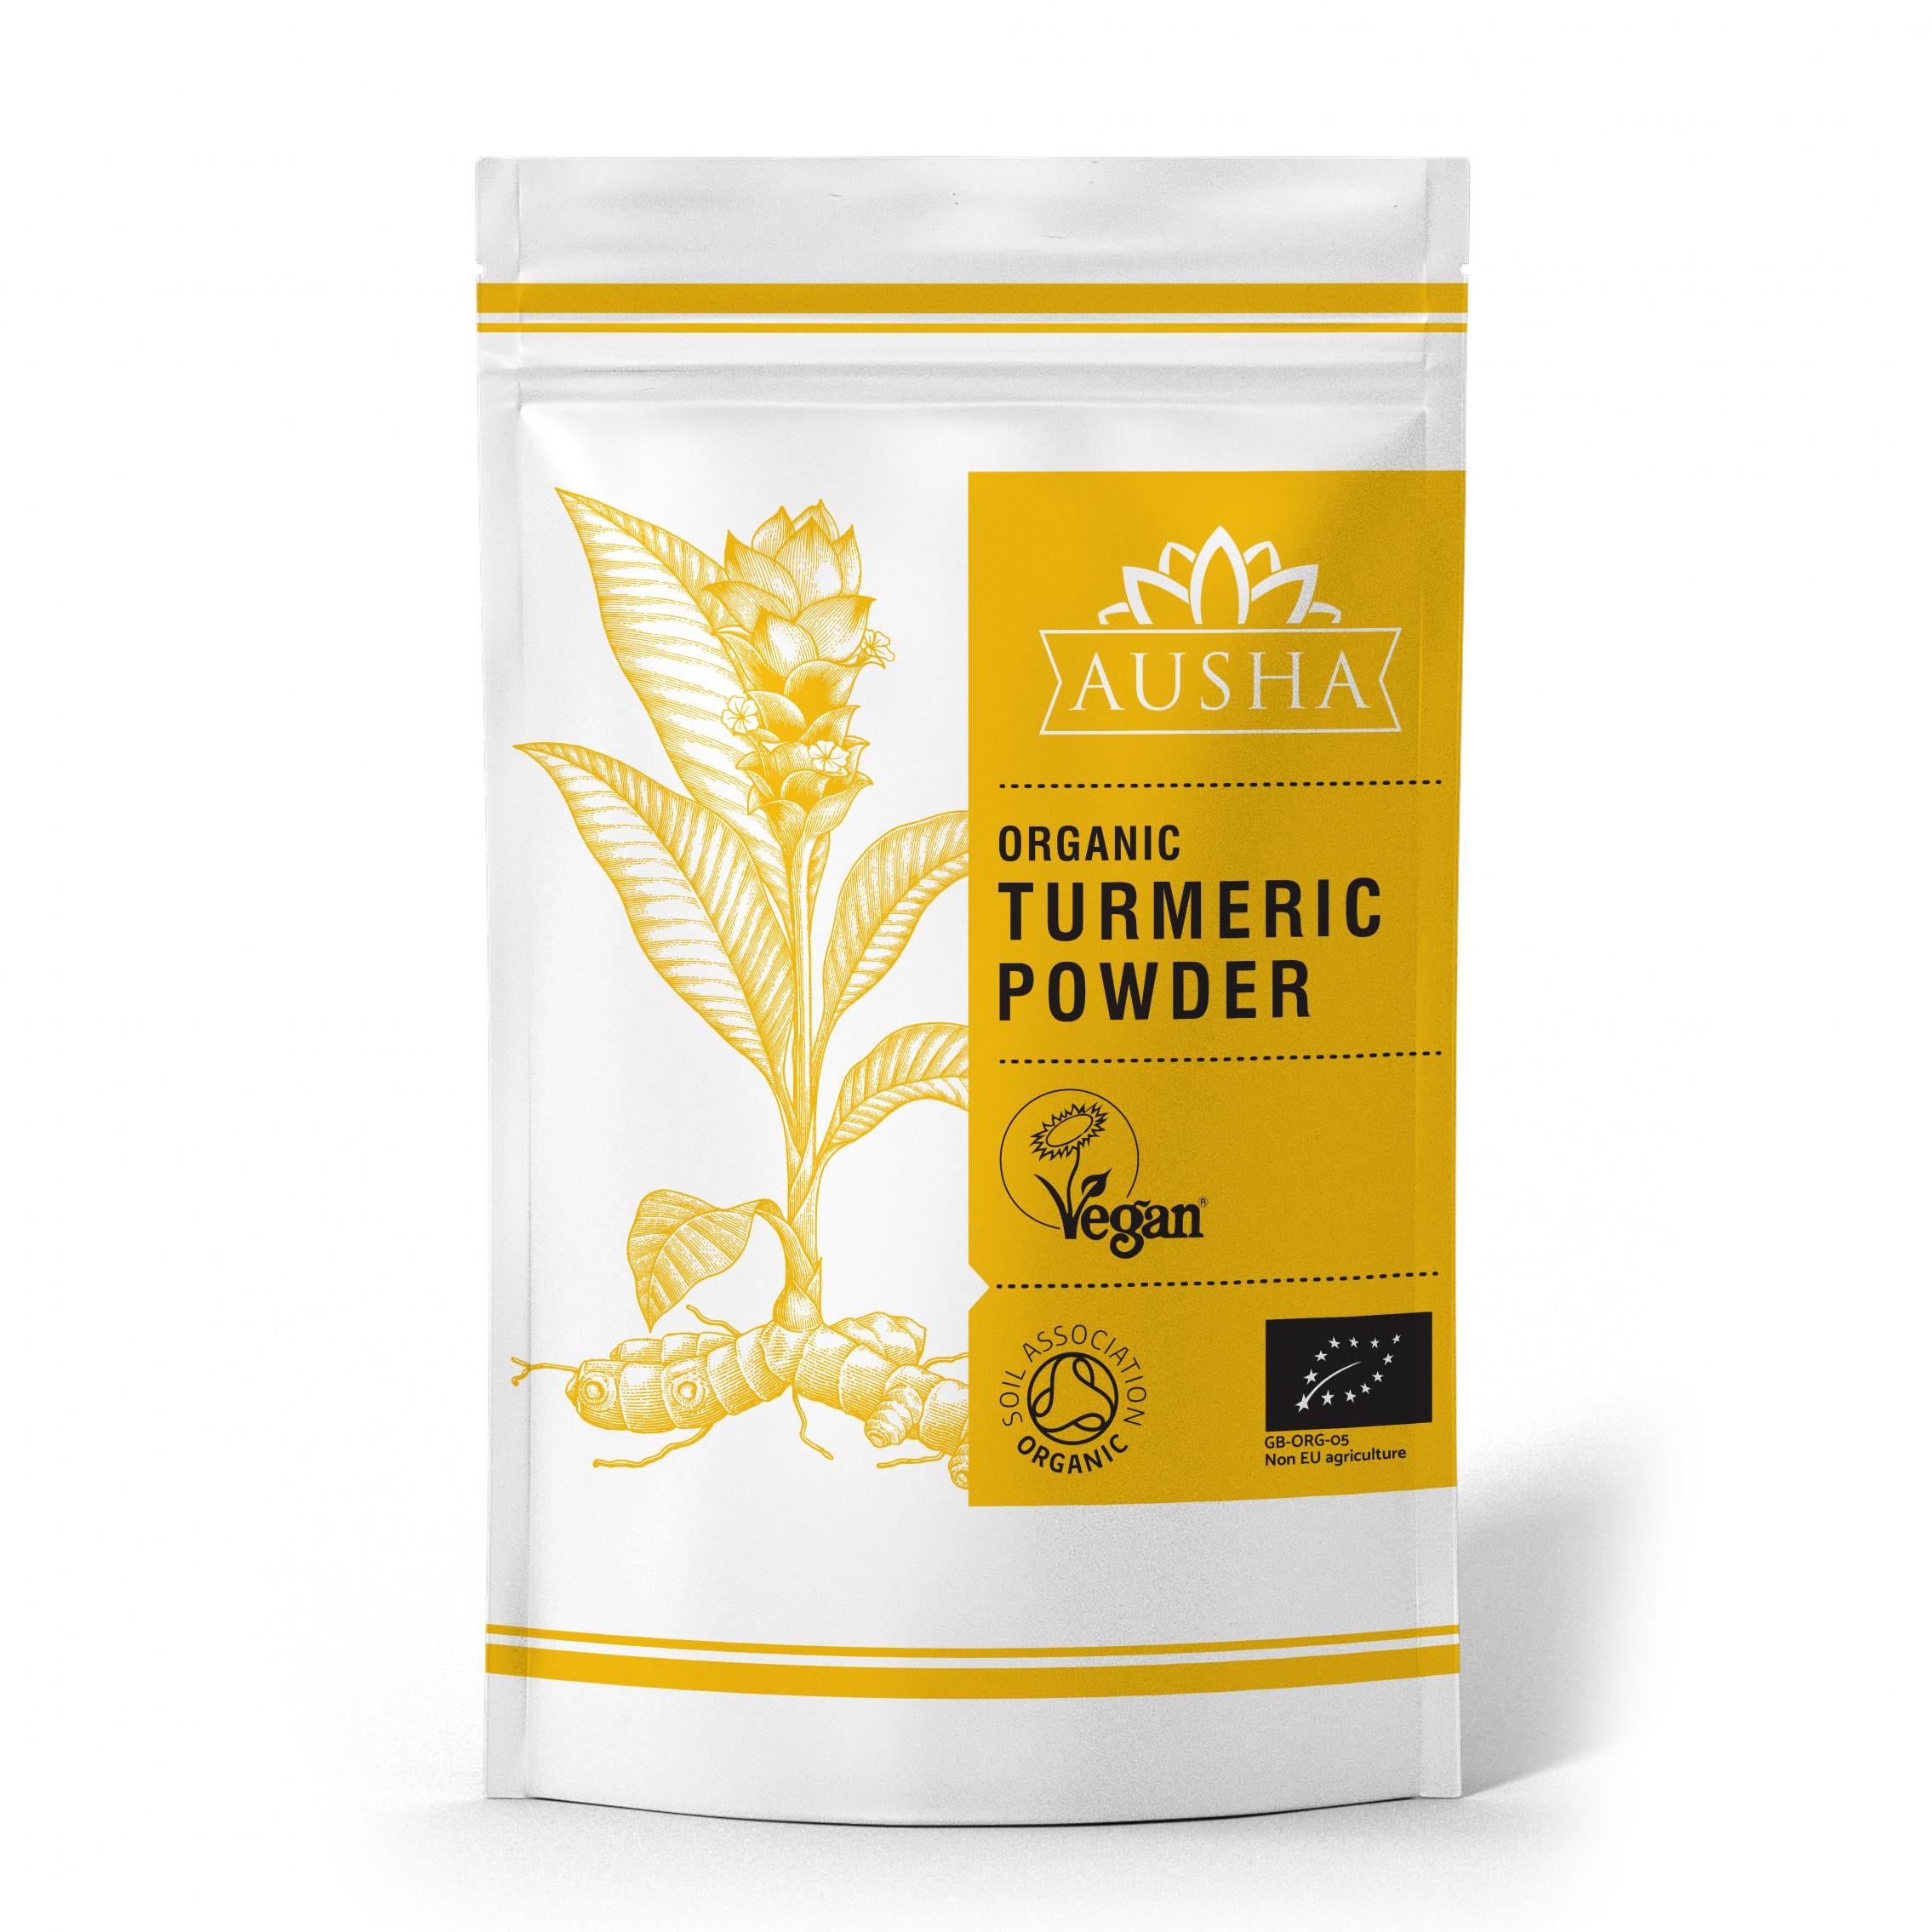 Ausha Organic Turmeric Powder 200g